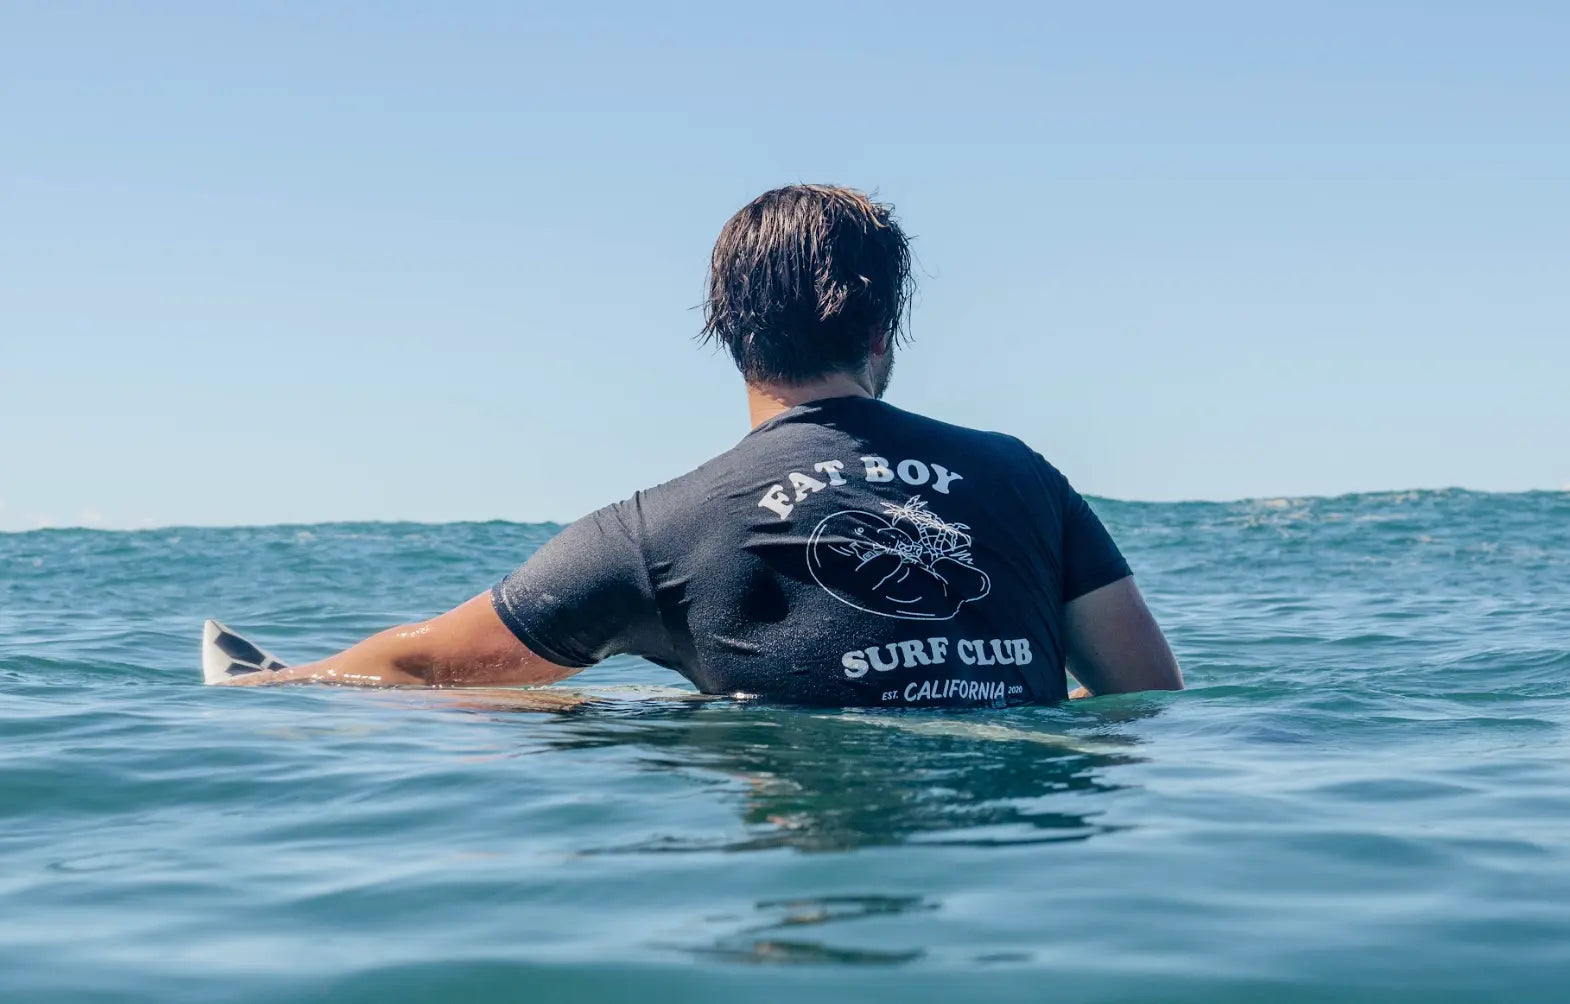 Mana-Tee (Navy) Fat Boy Surf Club